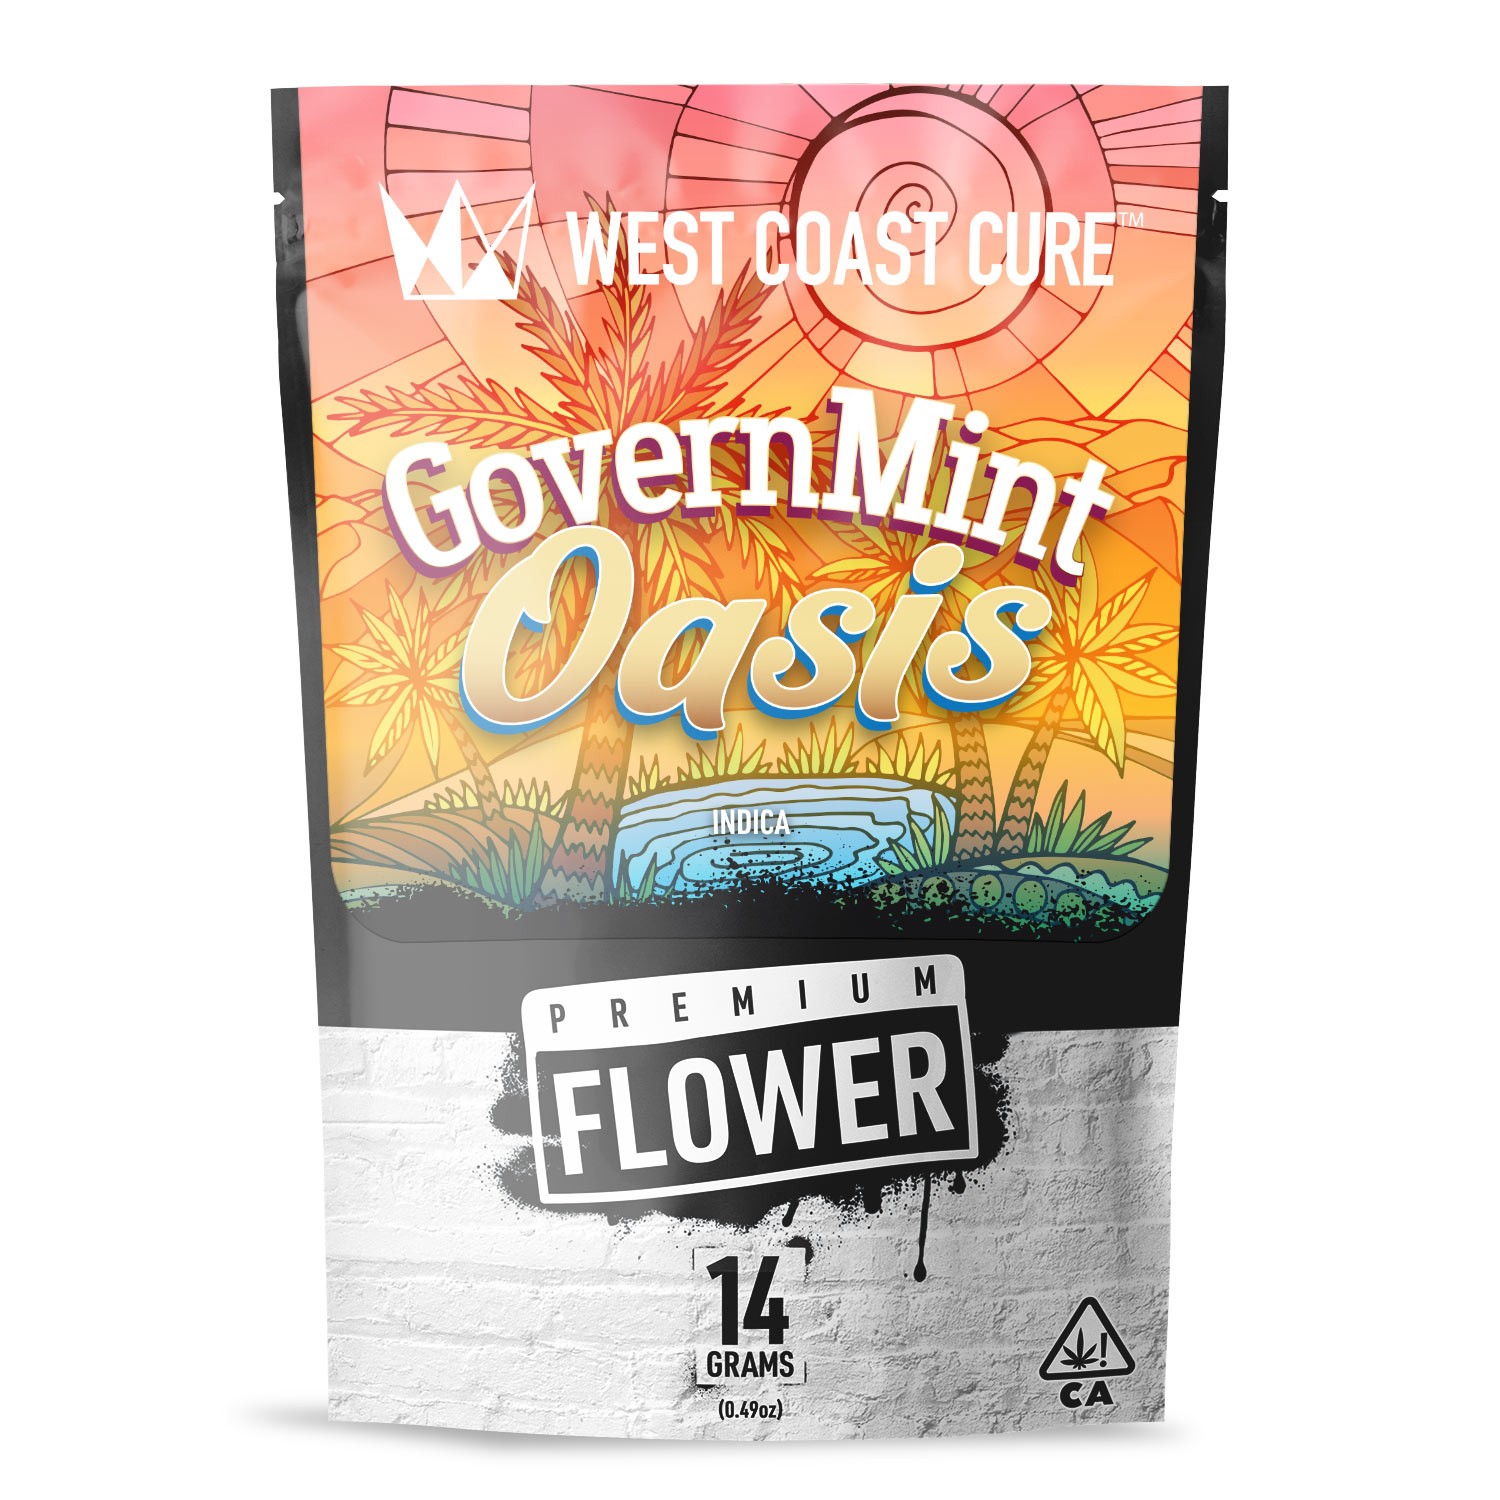 Governmint Oasis - 14G Premium Flower